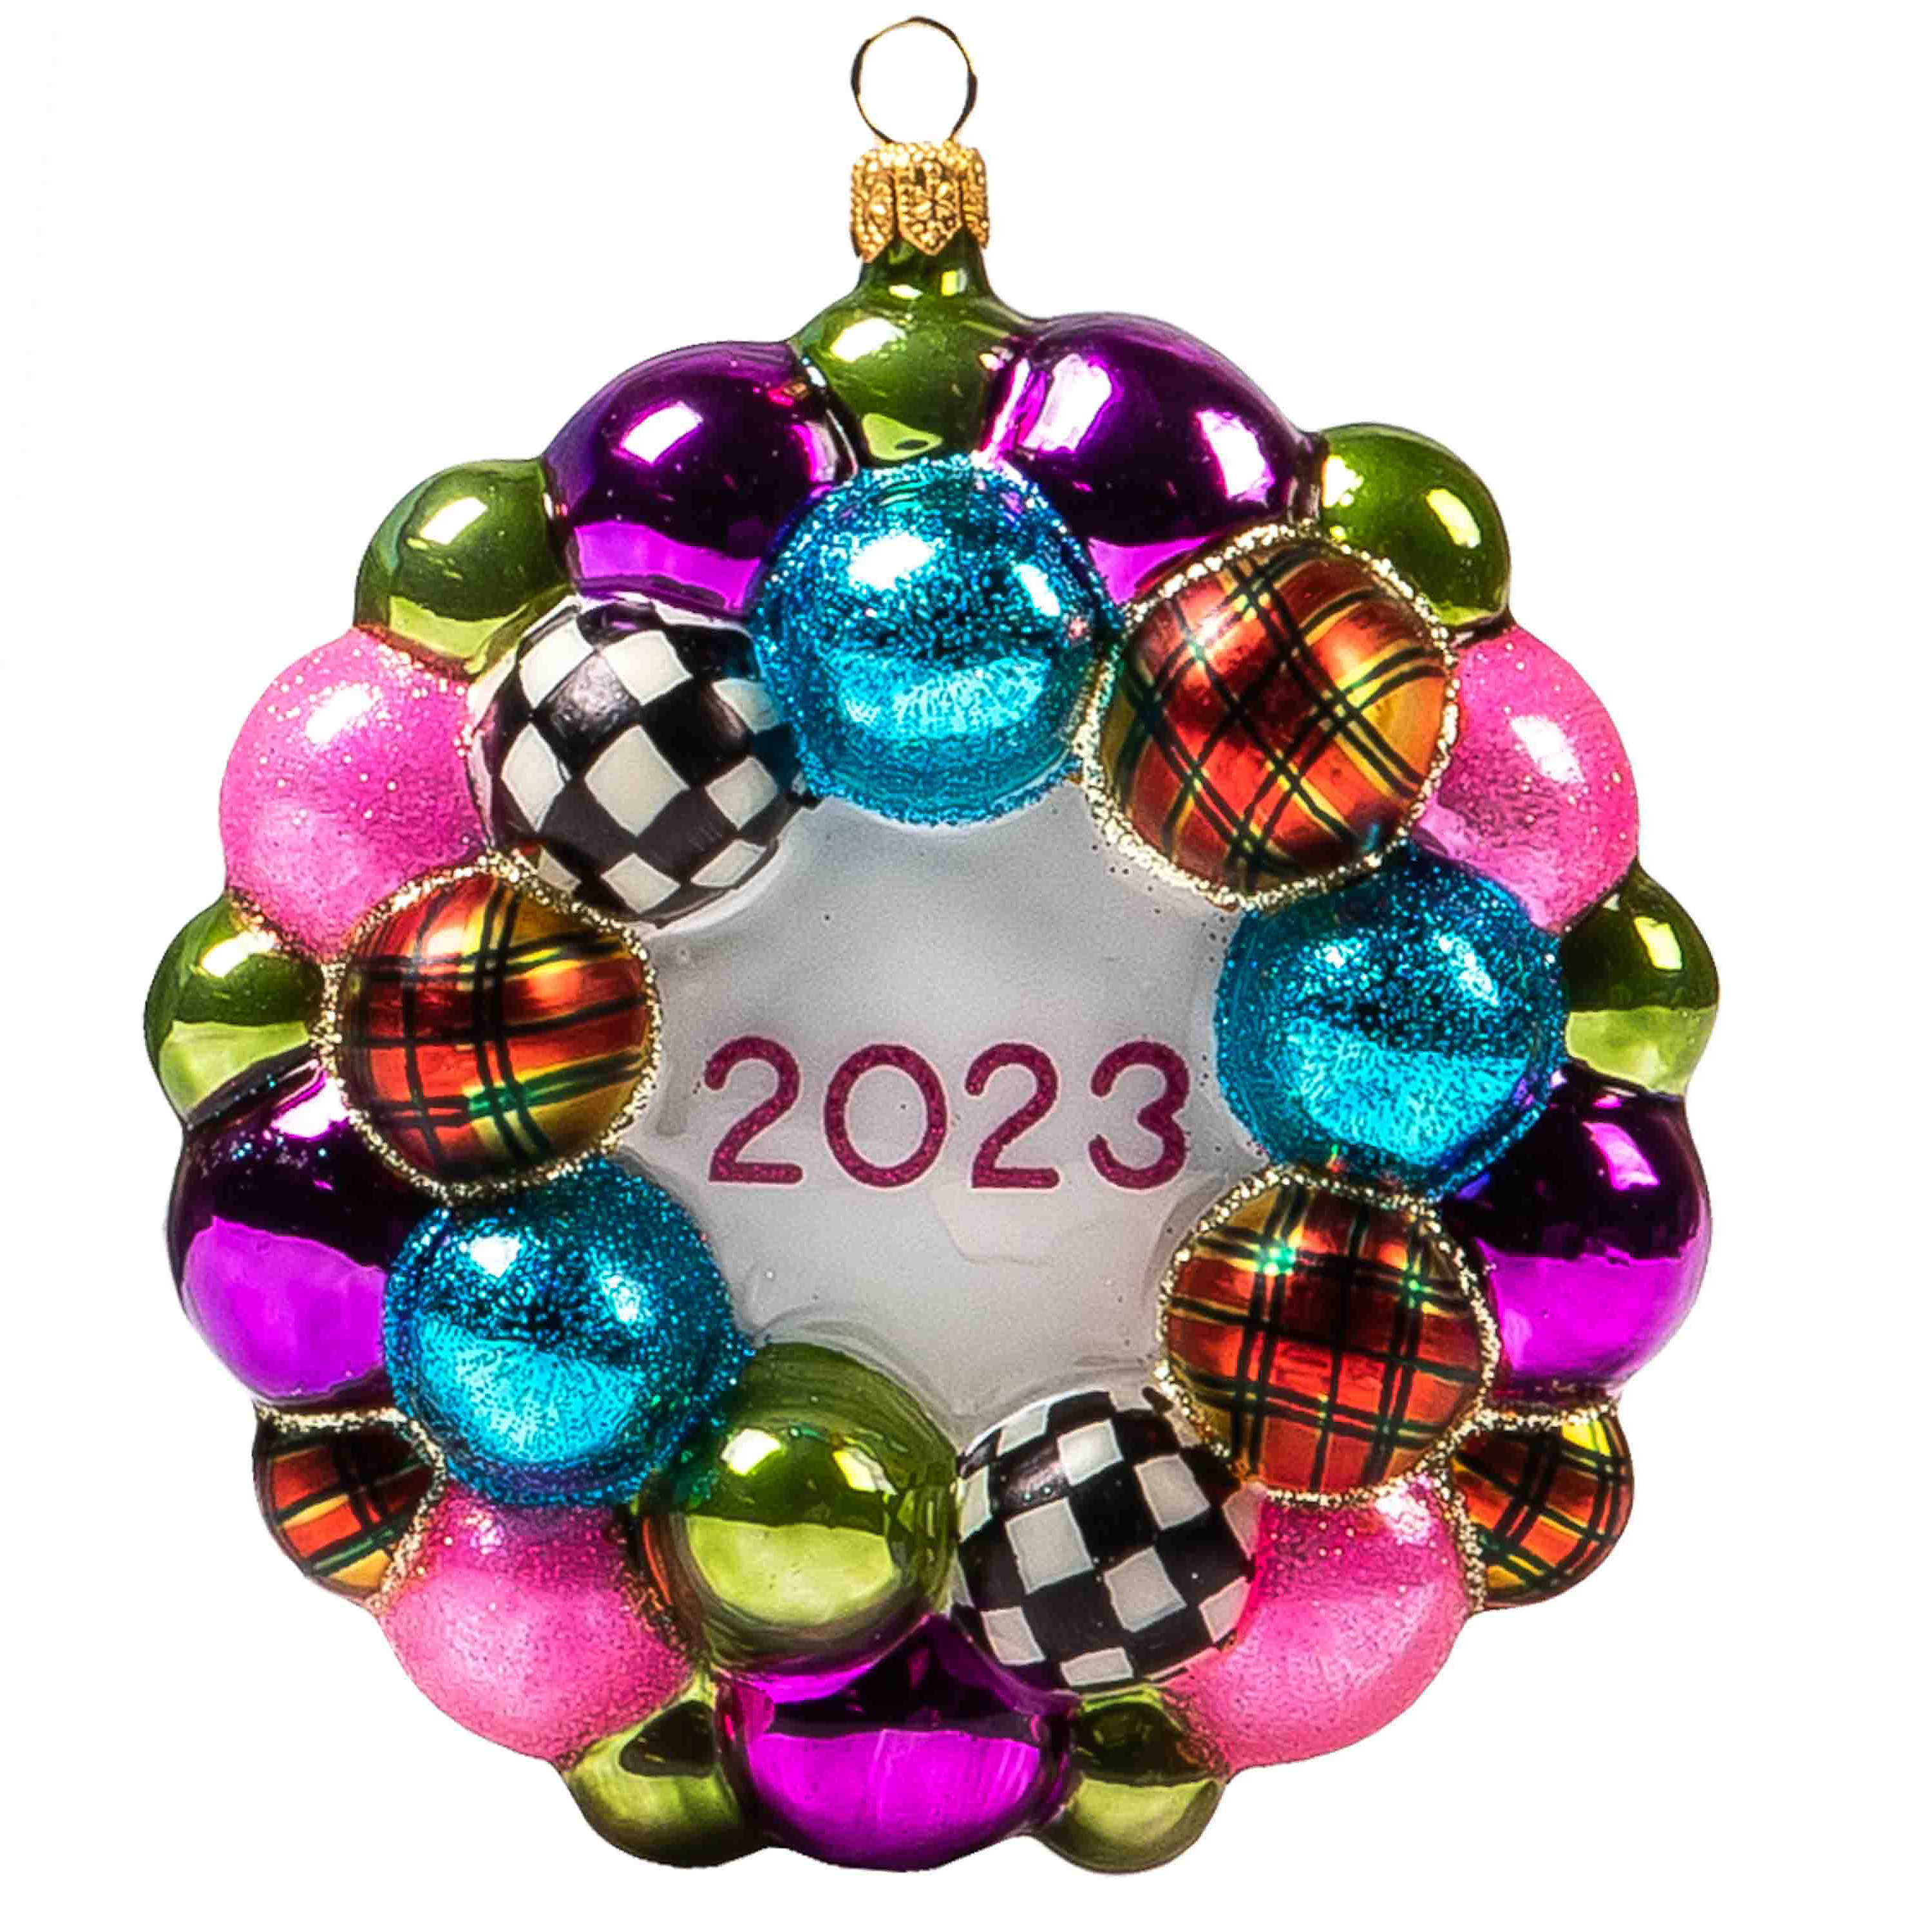 Glass Ornament - Granny Kitsch 2023 Wreath mackenzie-childs Panama 0